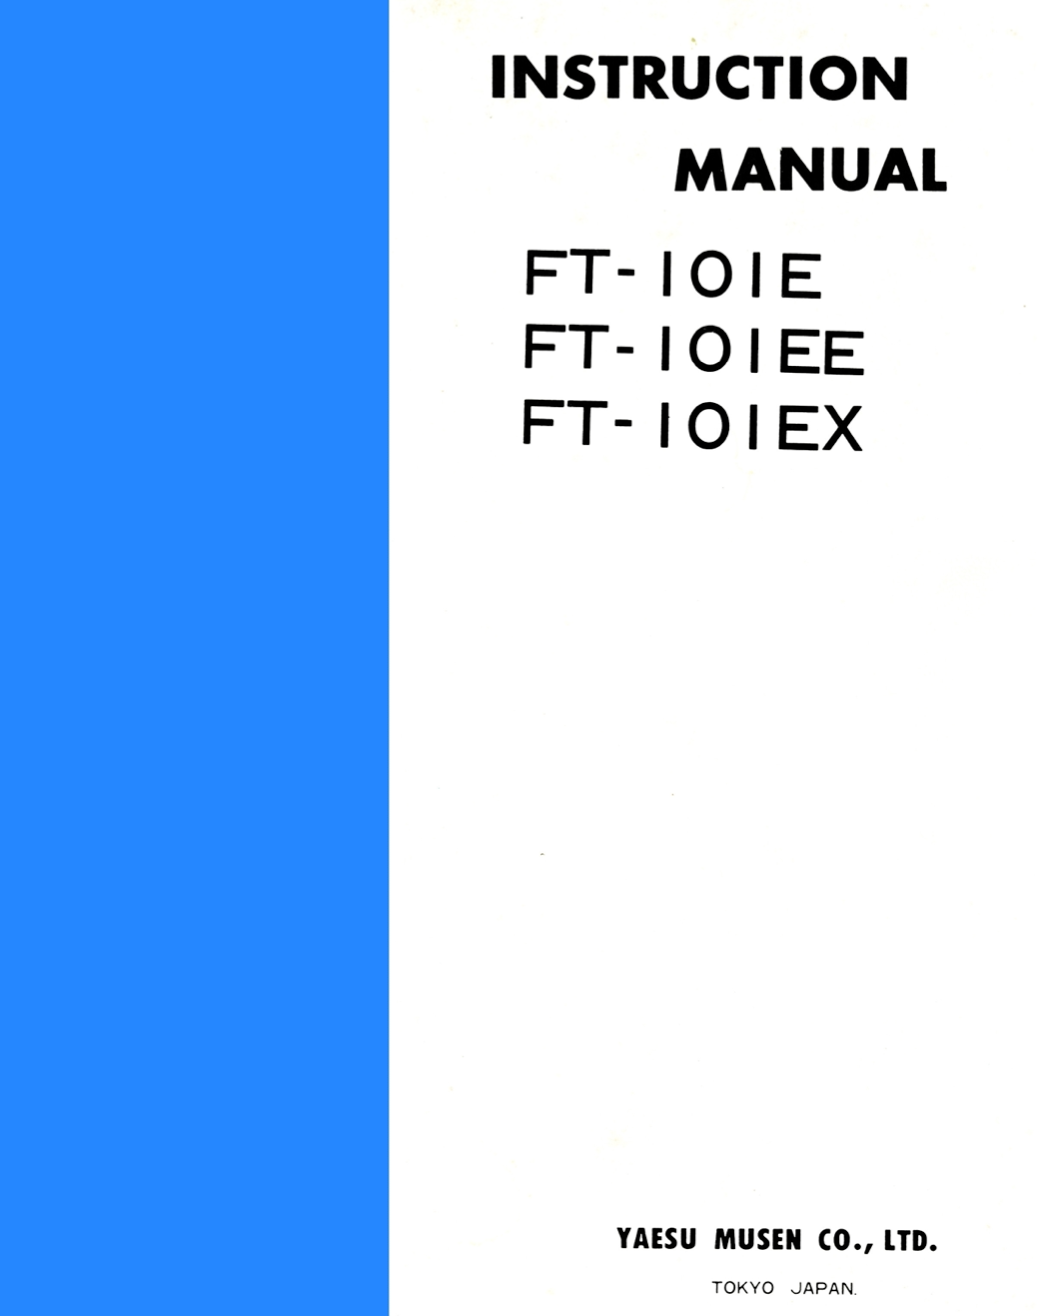 Yaesu FT-101E - Instruction Manual